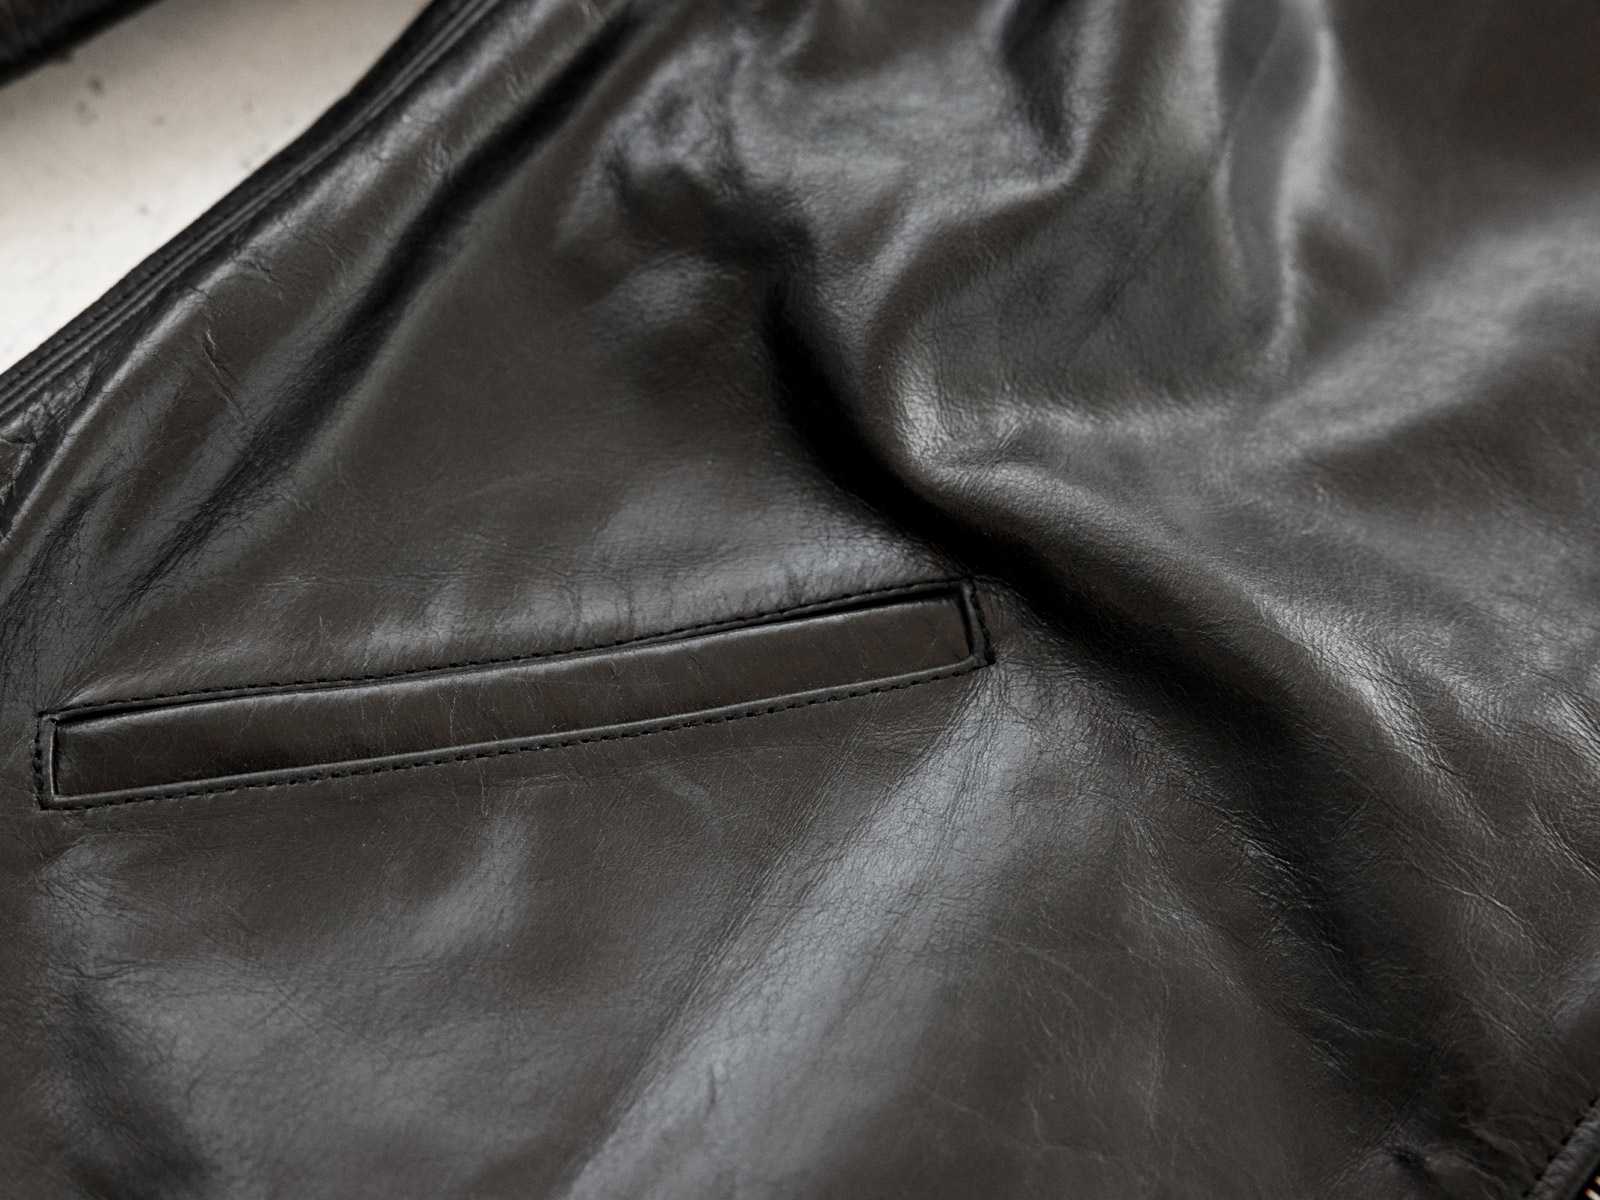 Half Belt Jacket - Horsehide Leather - AVI LEATHER